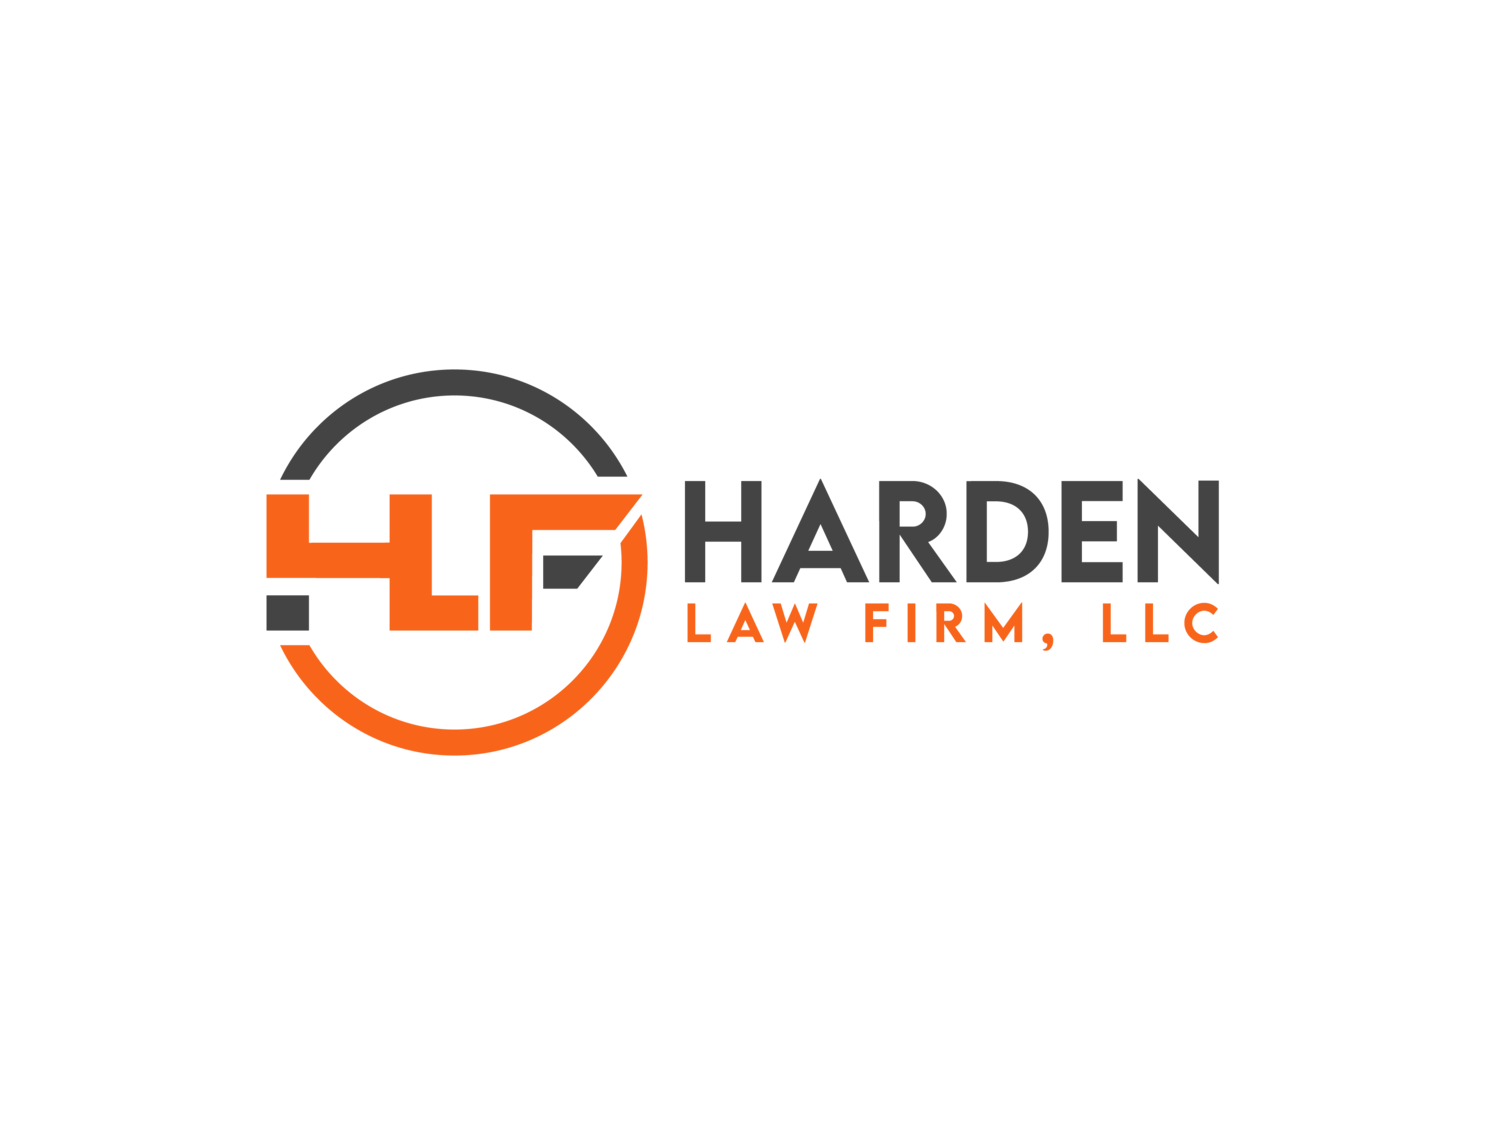 Harden Law Firm, LLC